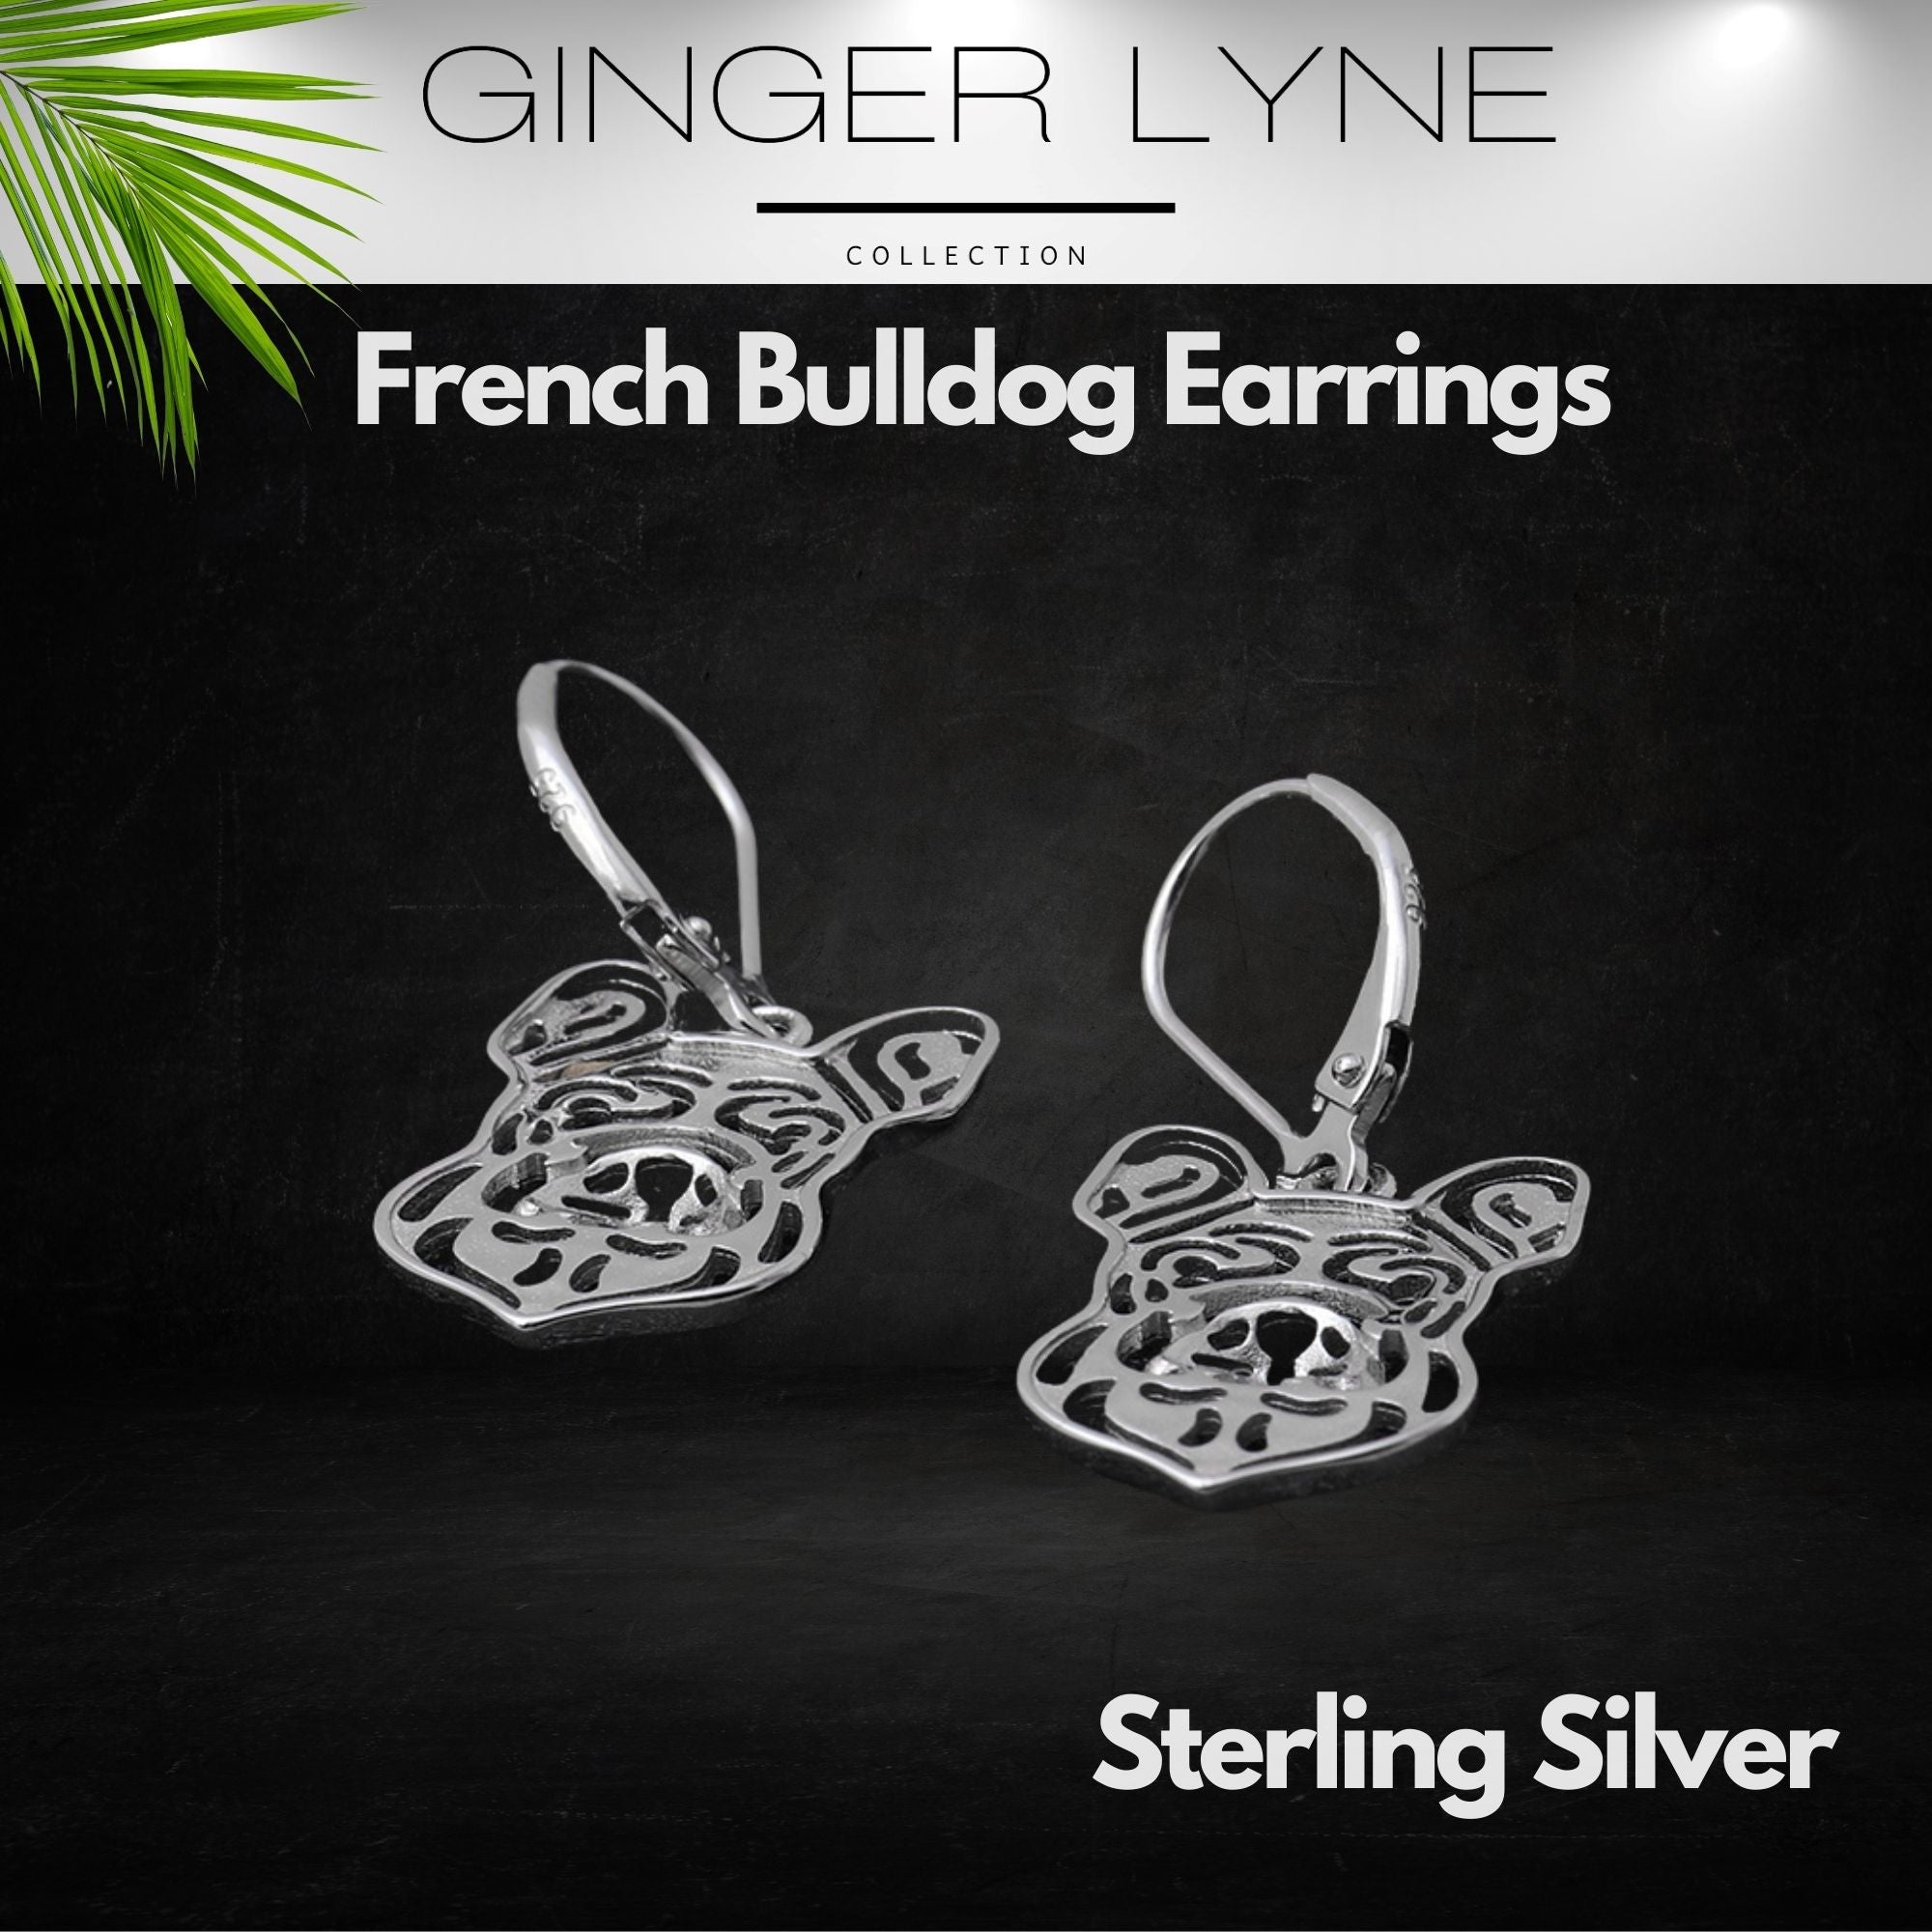 French Bulldog Frenchie Earrings for Women or Girls Sterling Silver Ginger Lyne Collection - Earrings